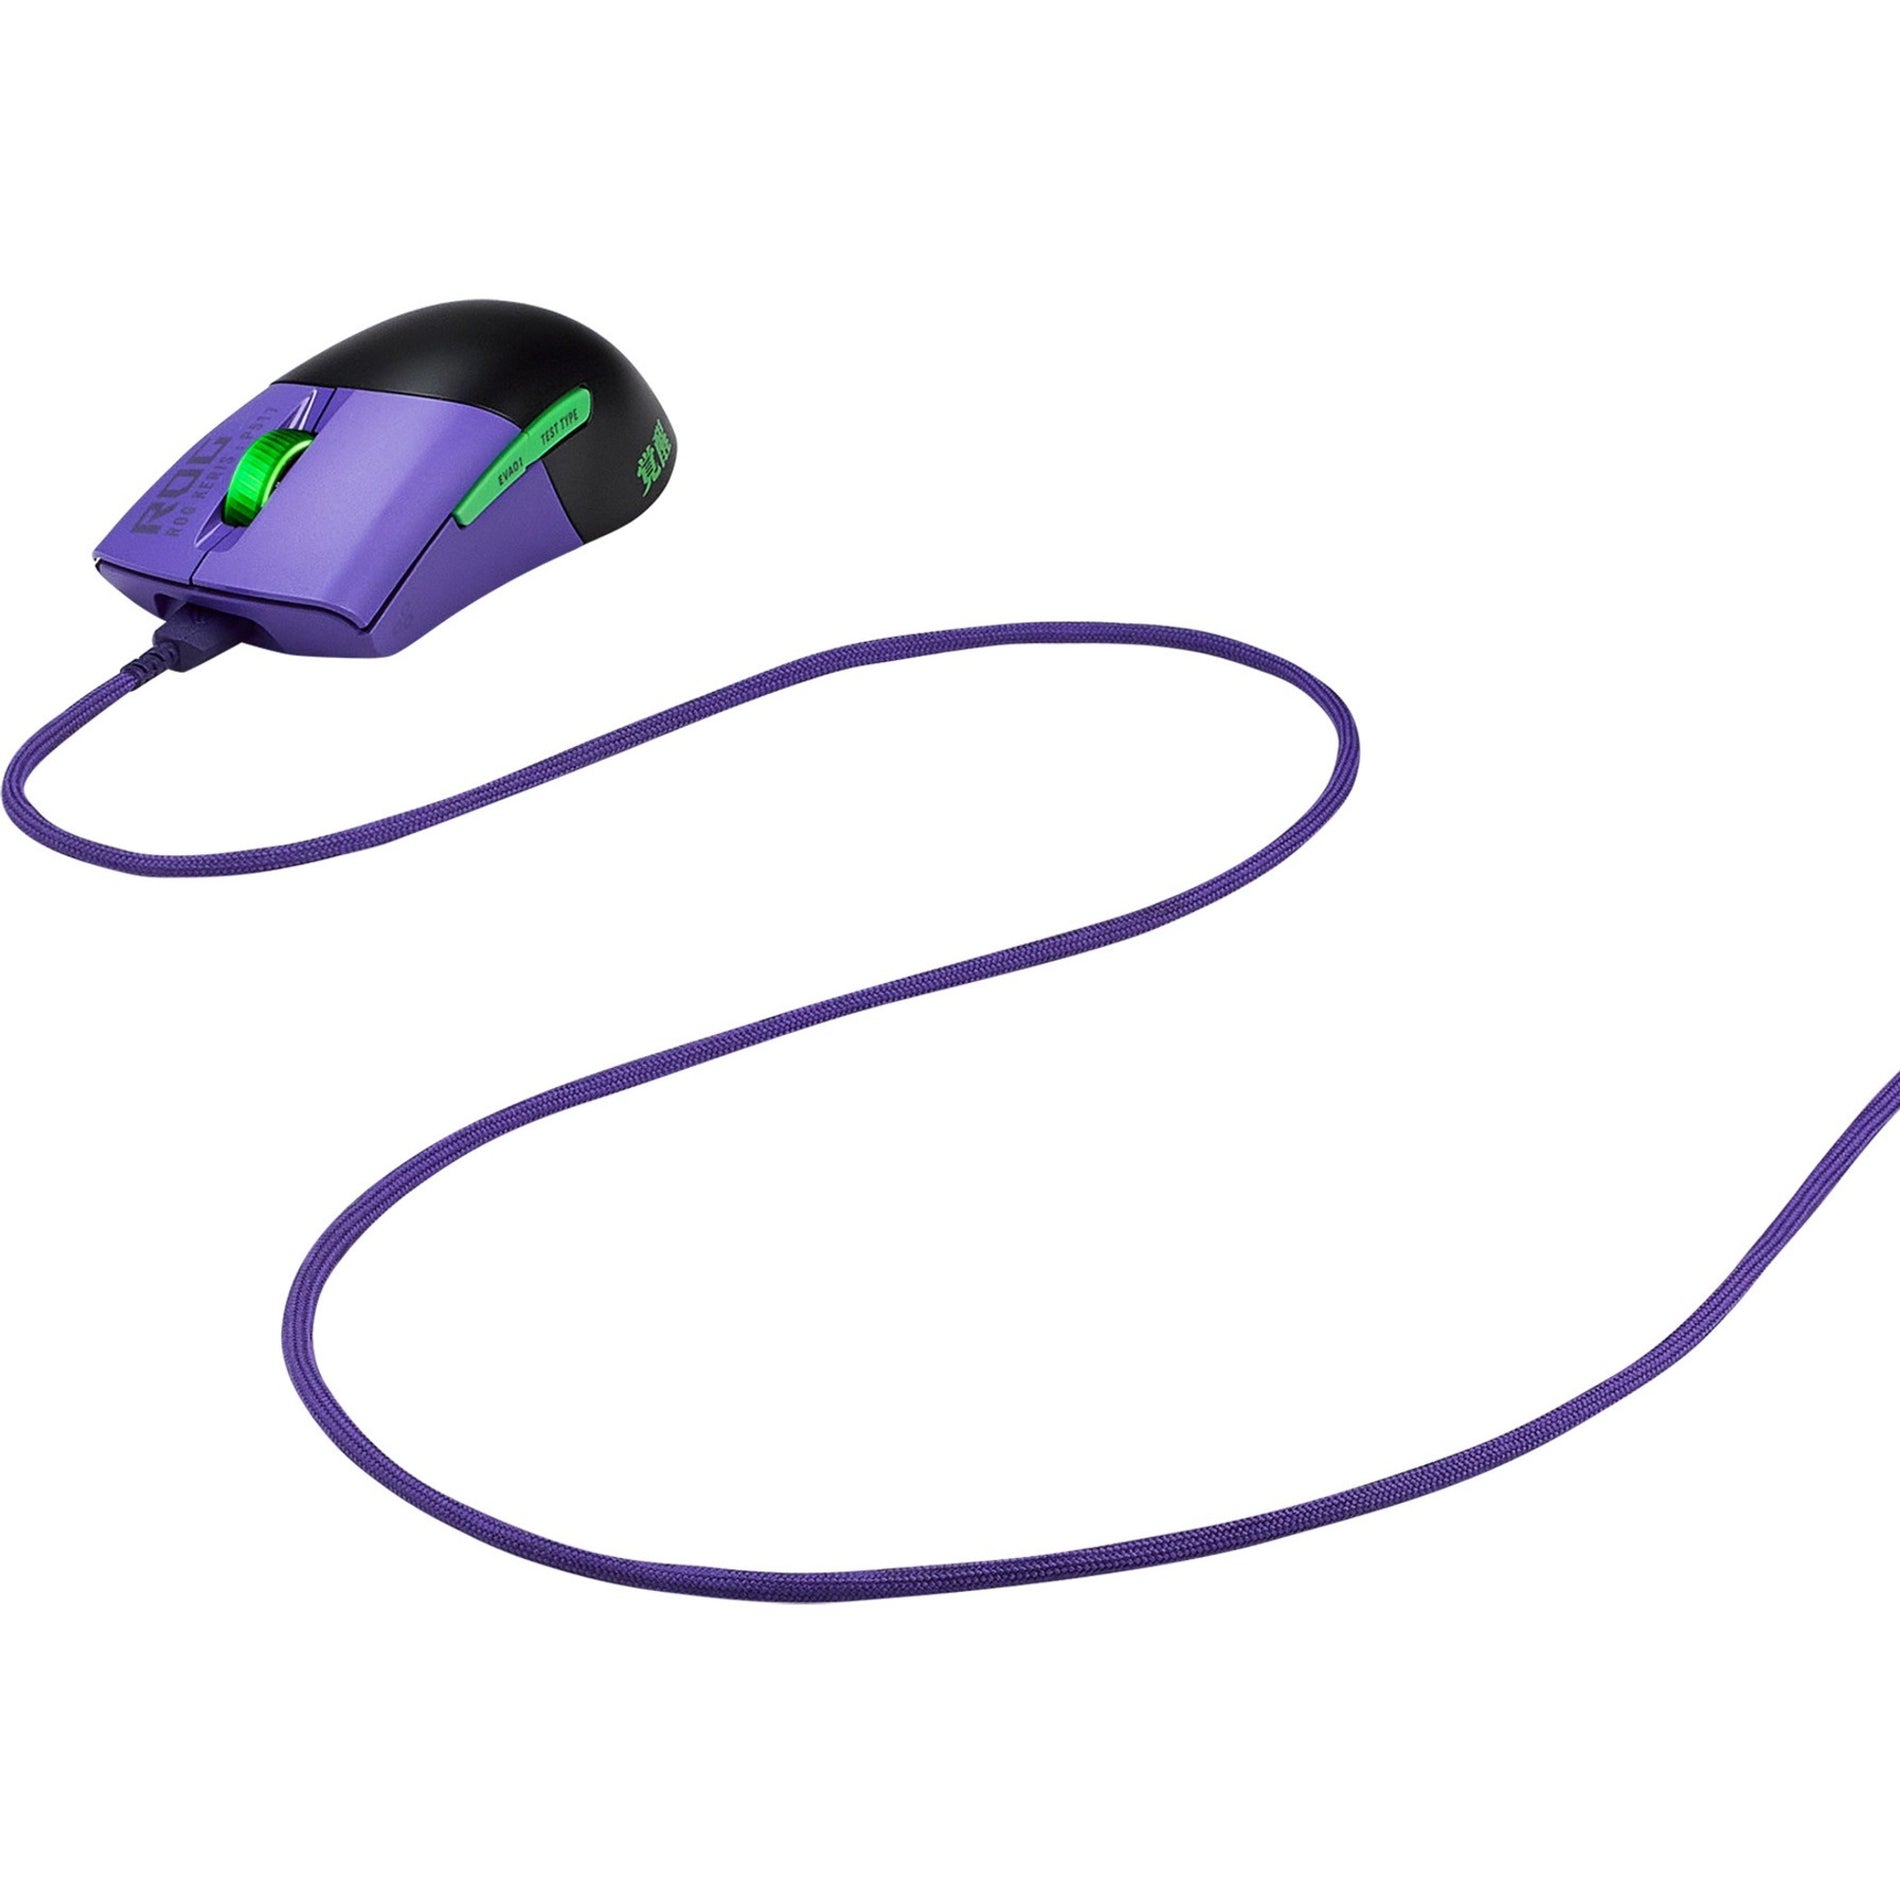 Asus ROG P517 ROG KERIS WIRELESS EVA ED Keris Wireless EVA Edition Gaming Mouse, 16000 dpi, Bluetooth 5.1